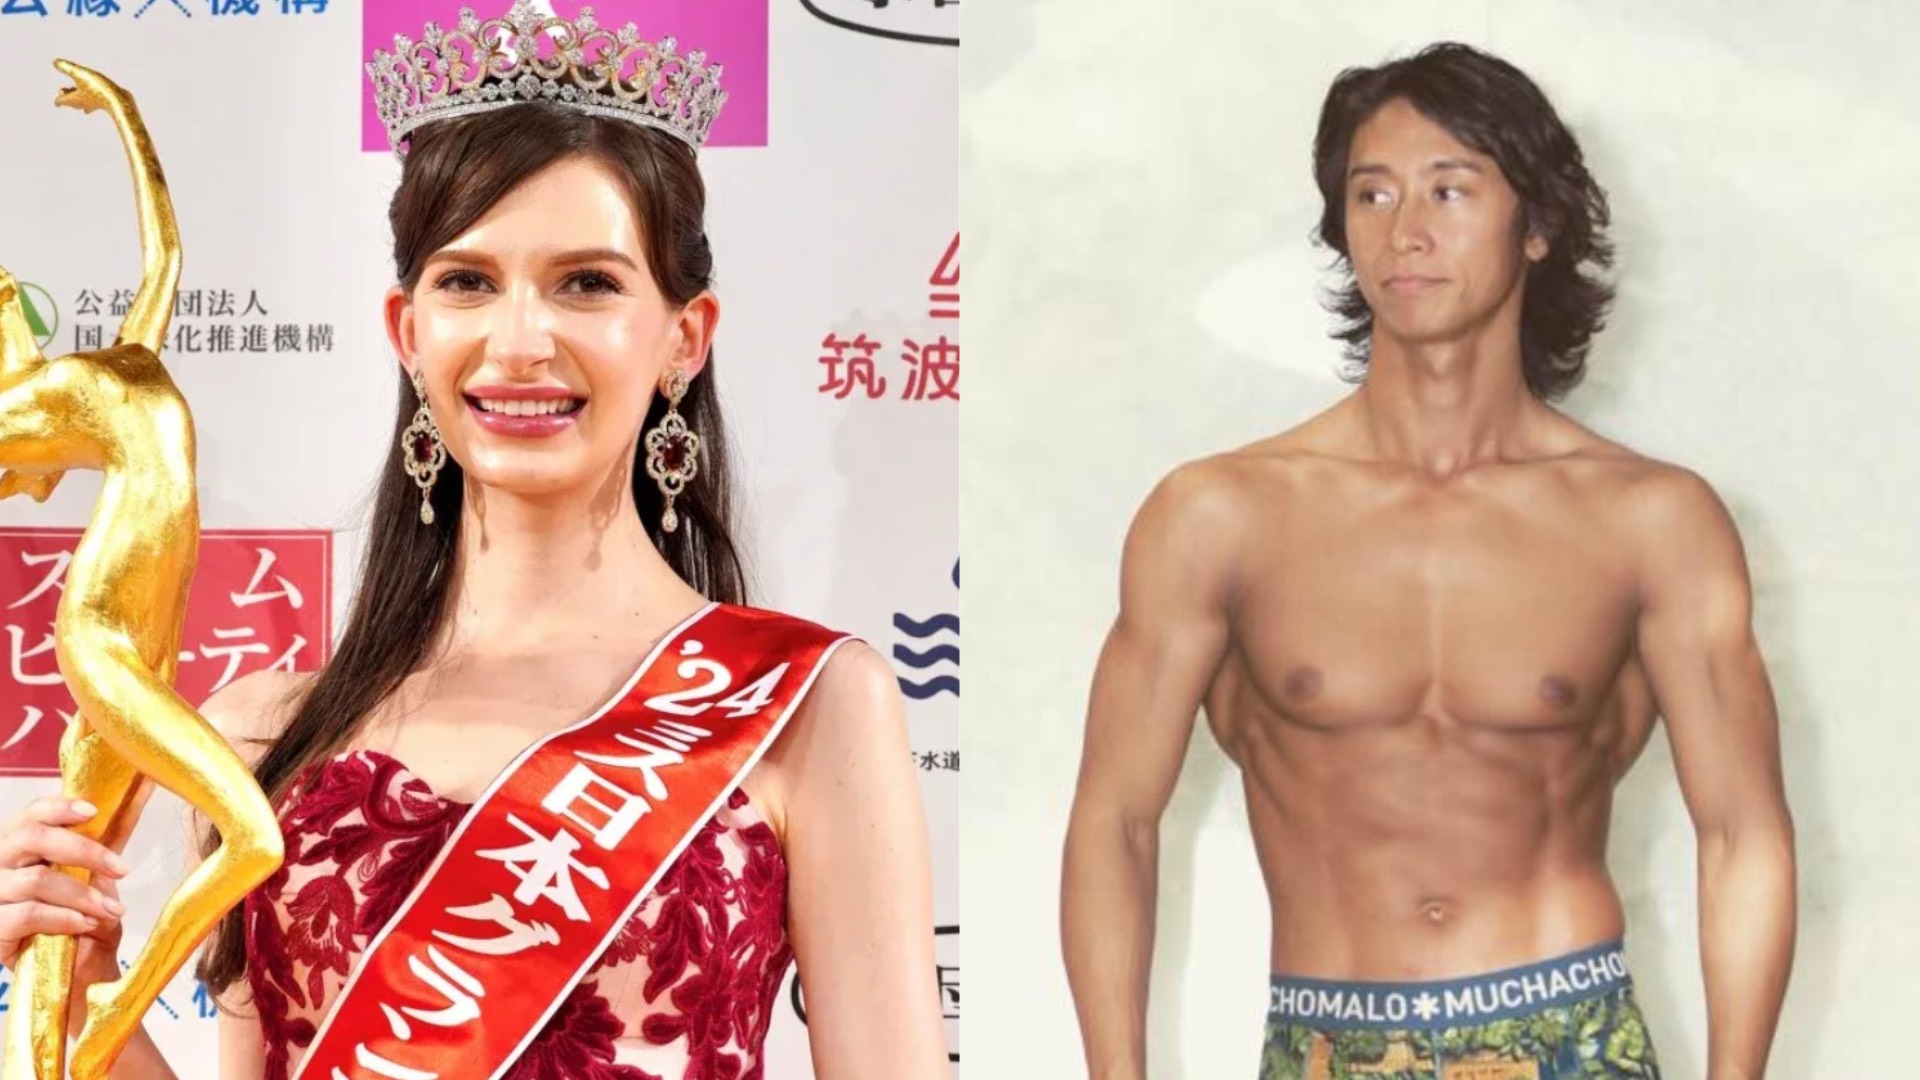 Ukraine-born Miss Japan, Karolina Shiino gives up title over affair with married man